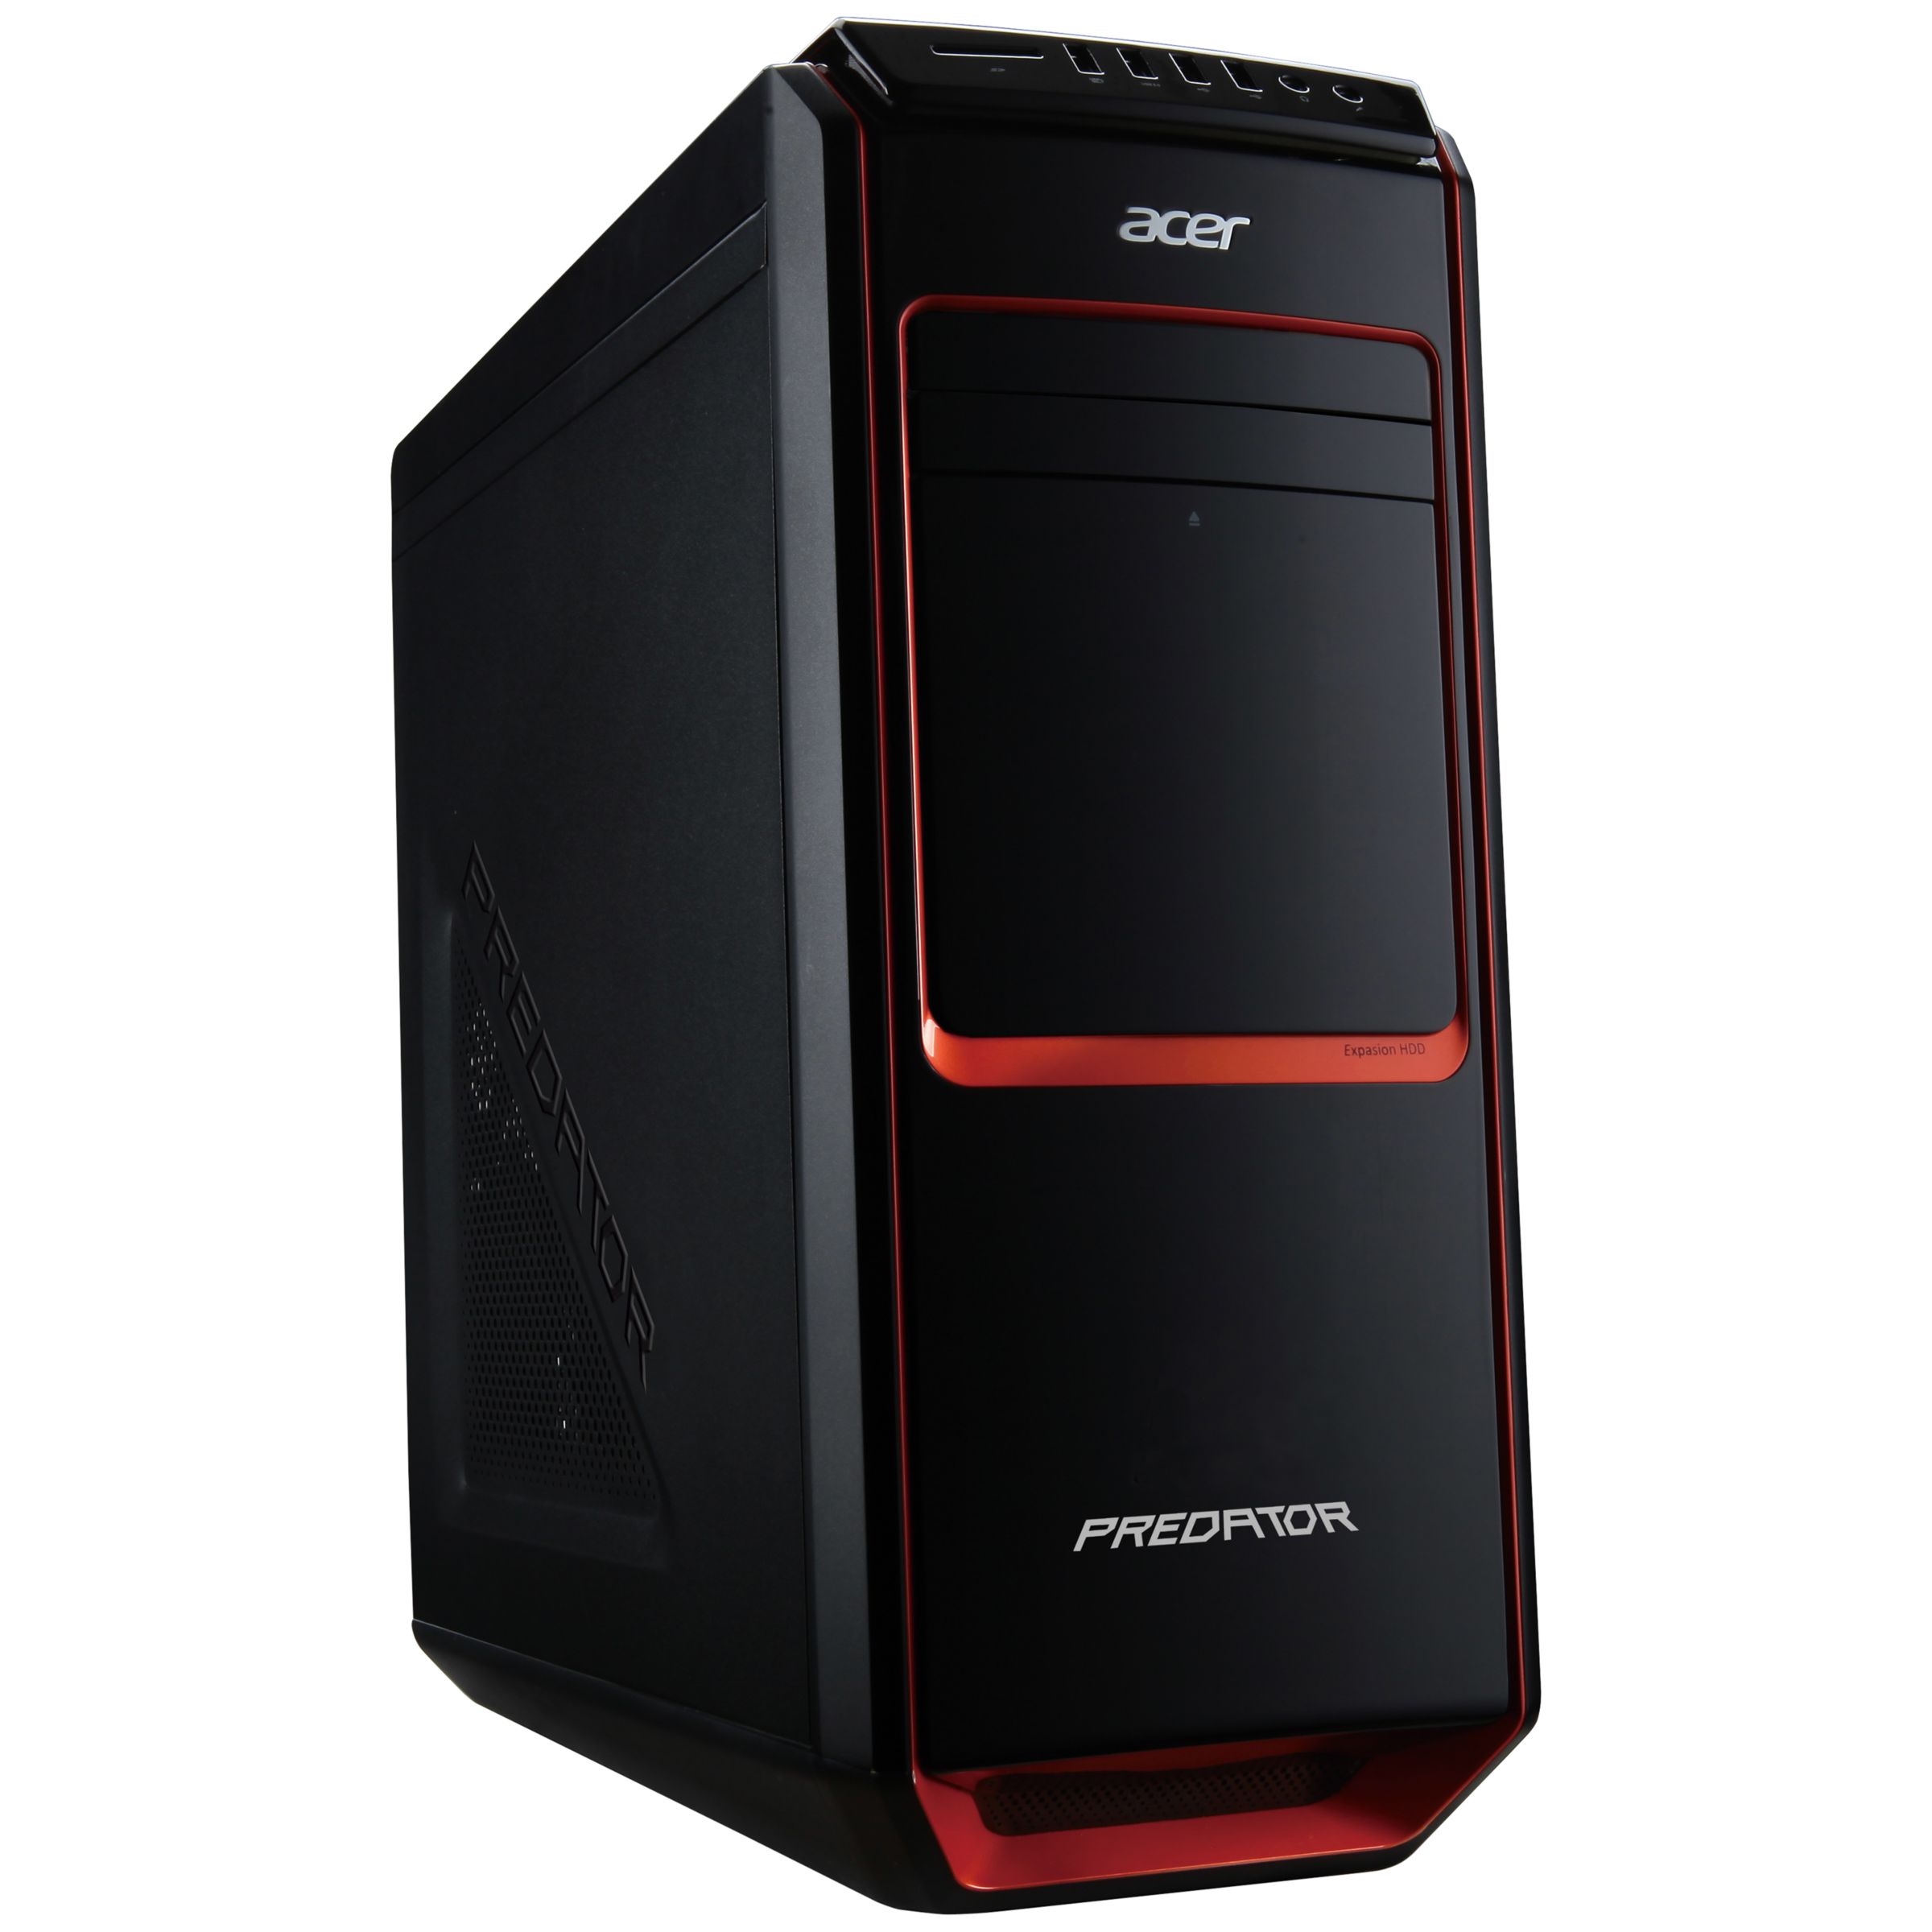 Acer Predator G3 605 Desktop Pc Intel Core I7 16gb Ram 2tb 60gb Ssd Black Orange At John Lewis Partners